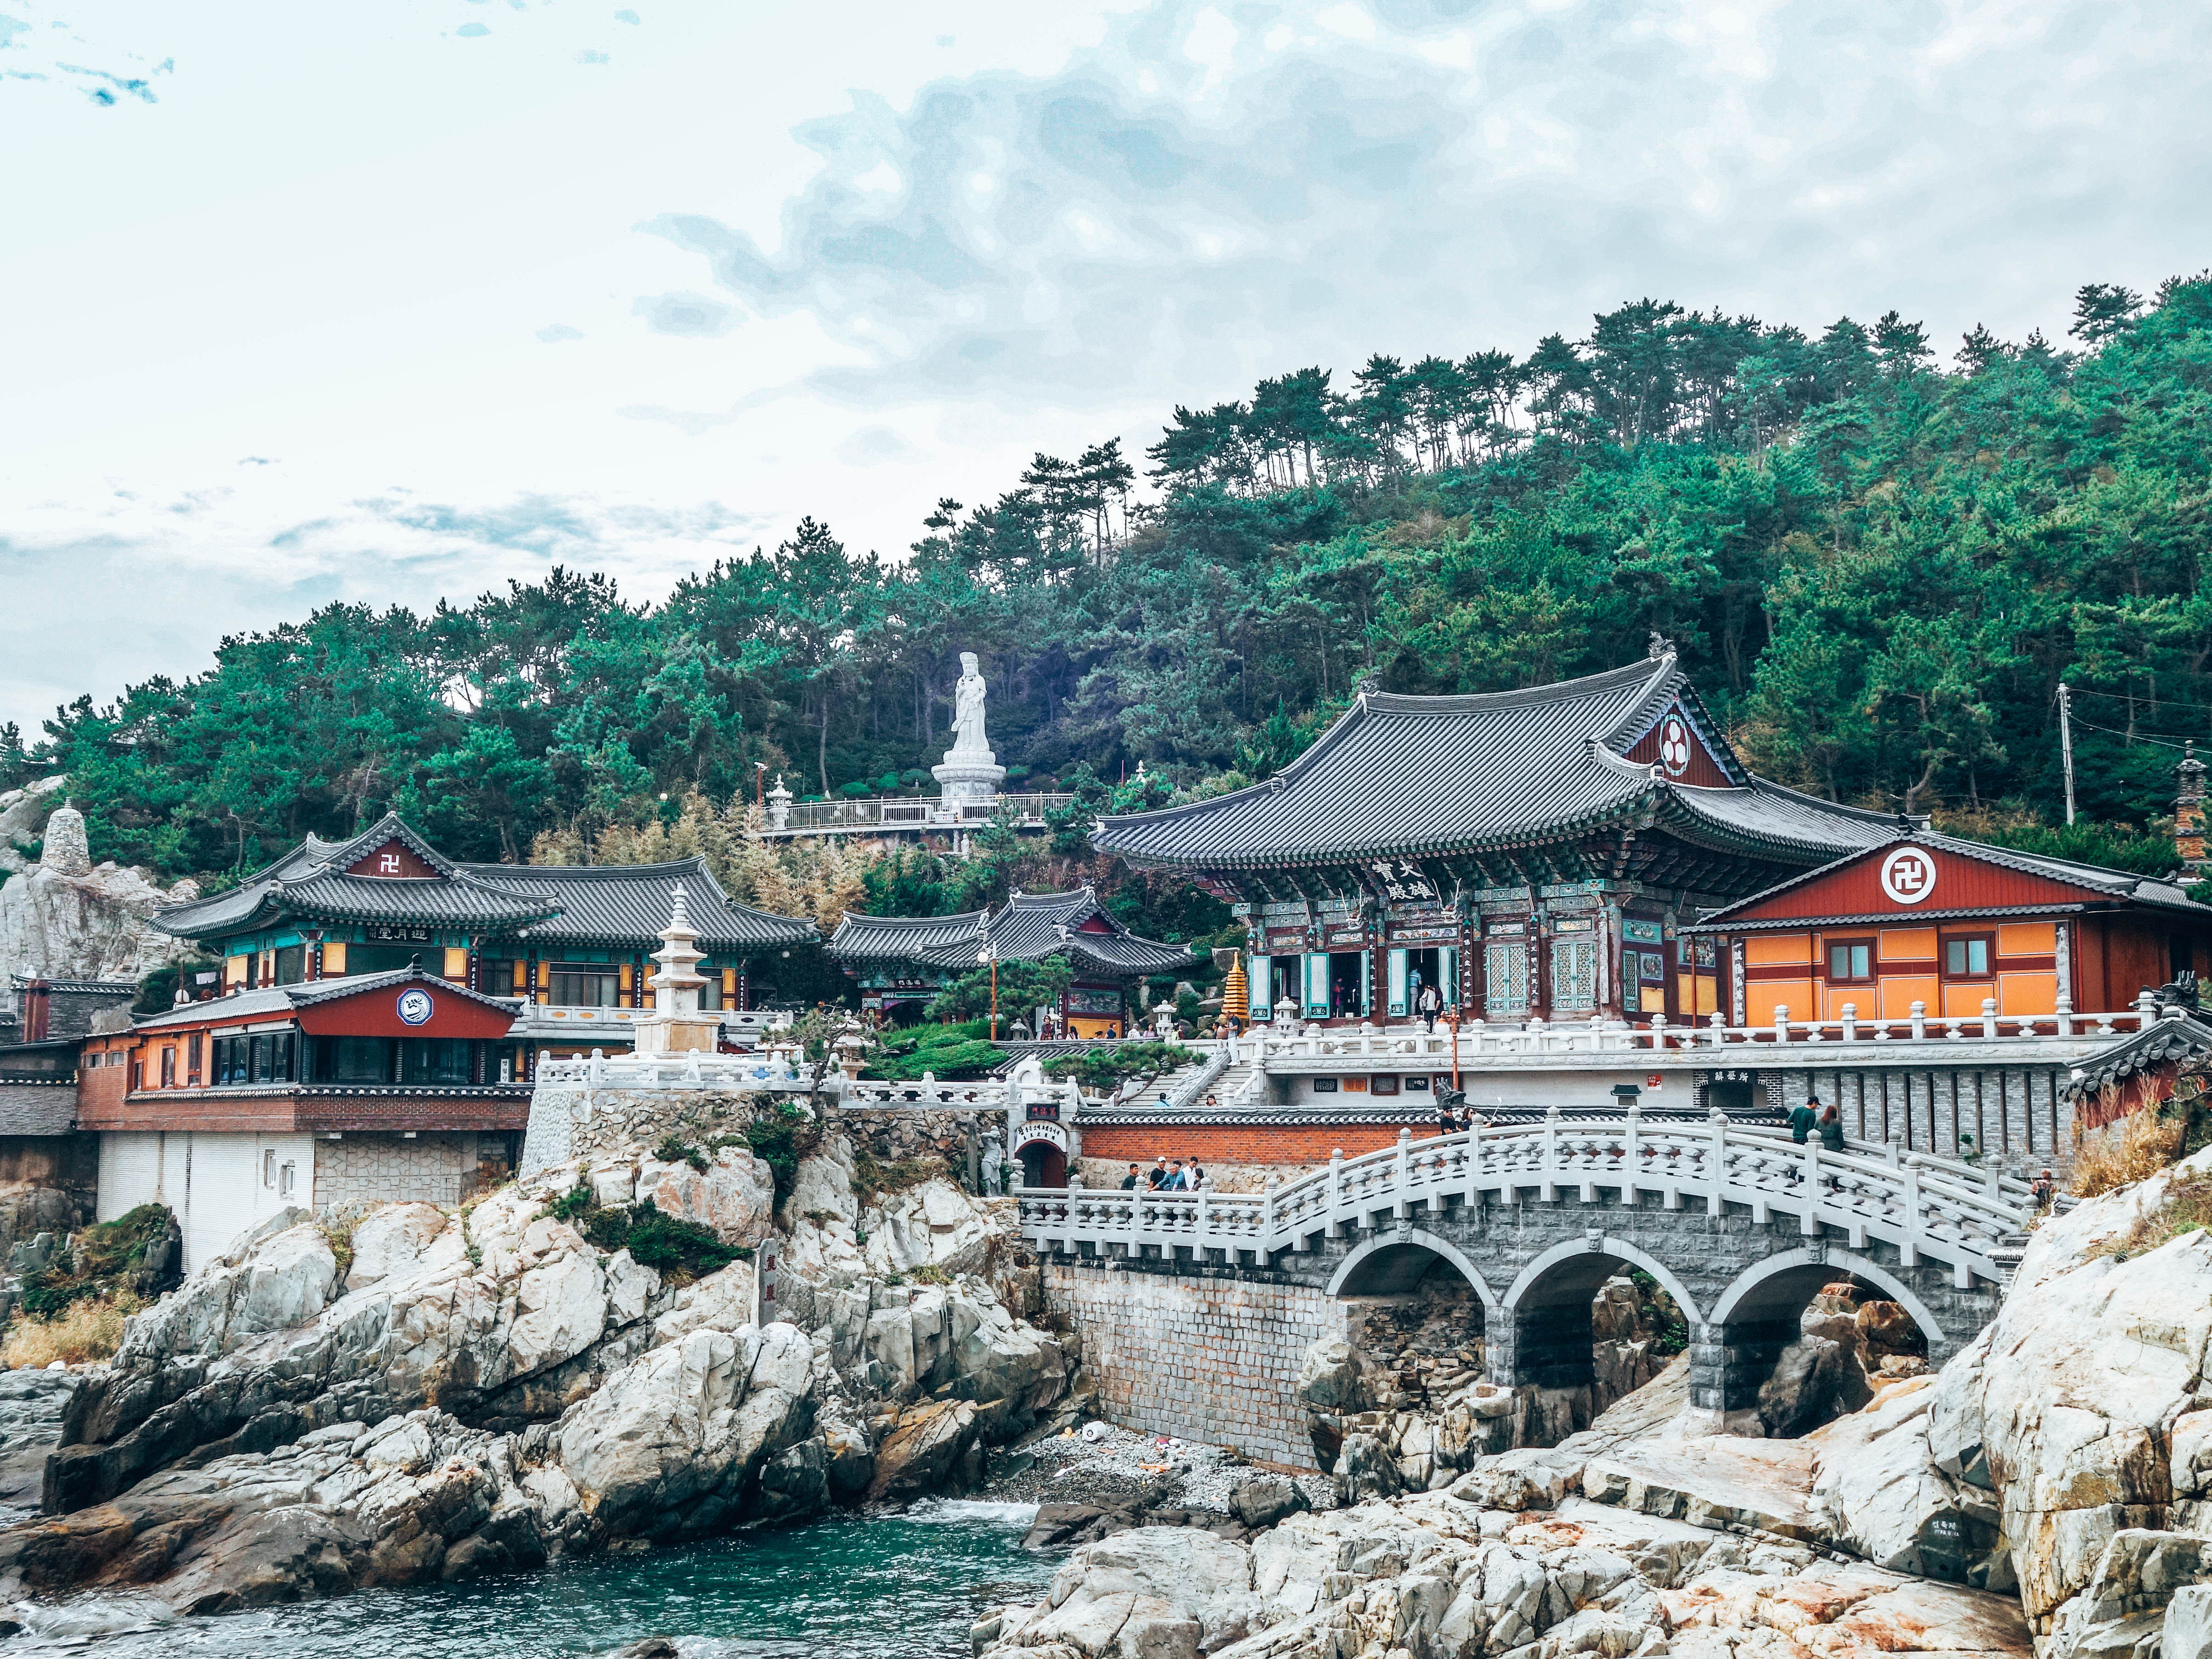 Haedong Yonggunsa Temple on the coast of Busan - Wediditourway.com